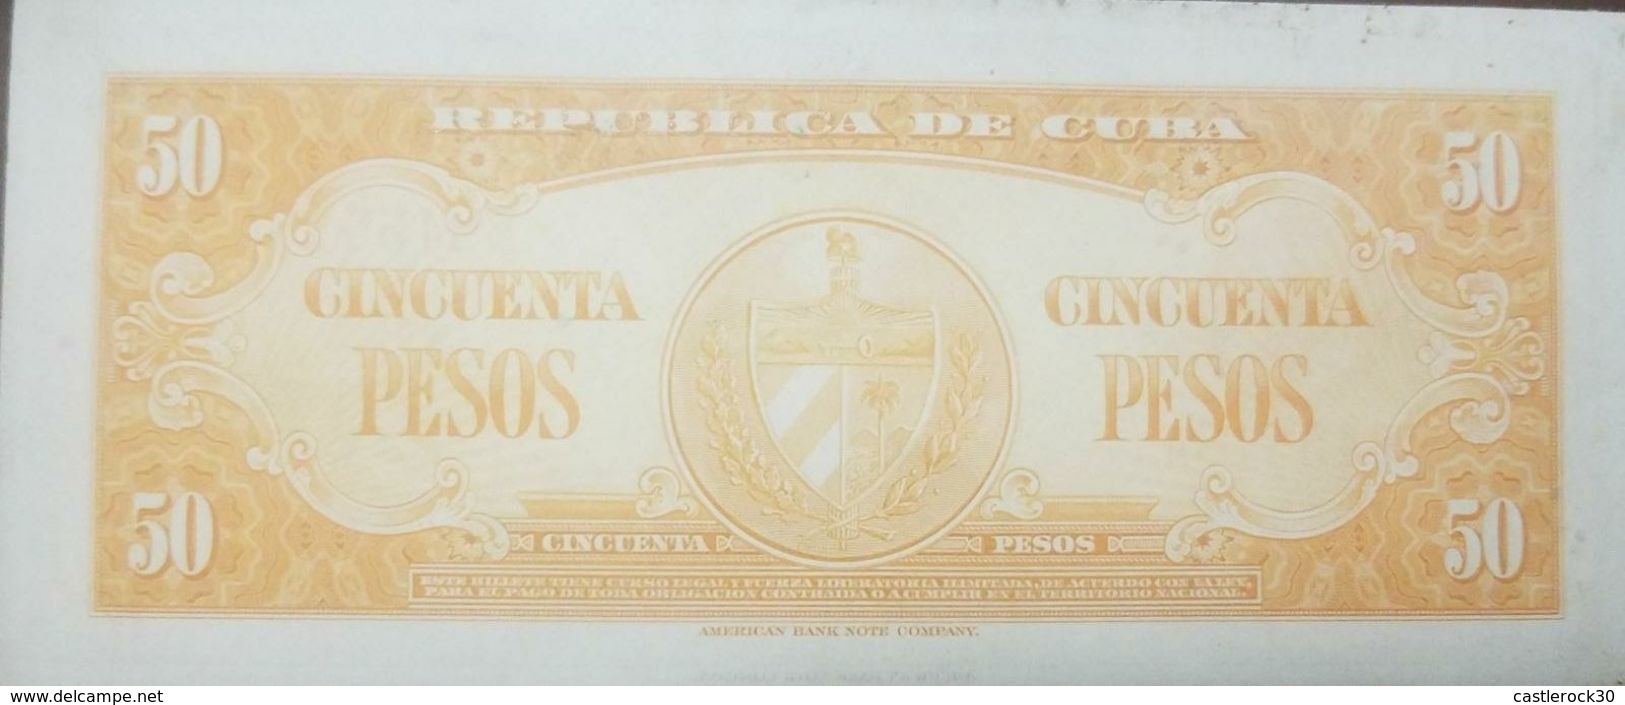 L) 1958 CUBA, BANKNOTES, CALIXTO GRACIA INIGUEZ, PEOPLE, 50 PESOS, TWO COLORS, ORANGE, BROWN, LIGHTLY TONED, UNC, XF - Cuba